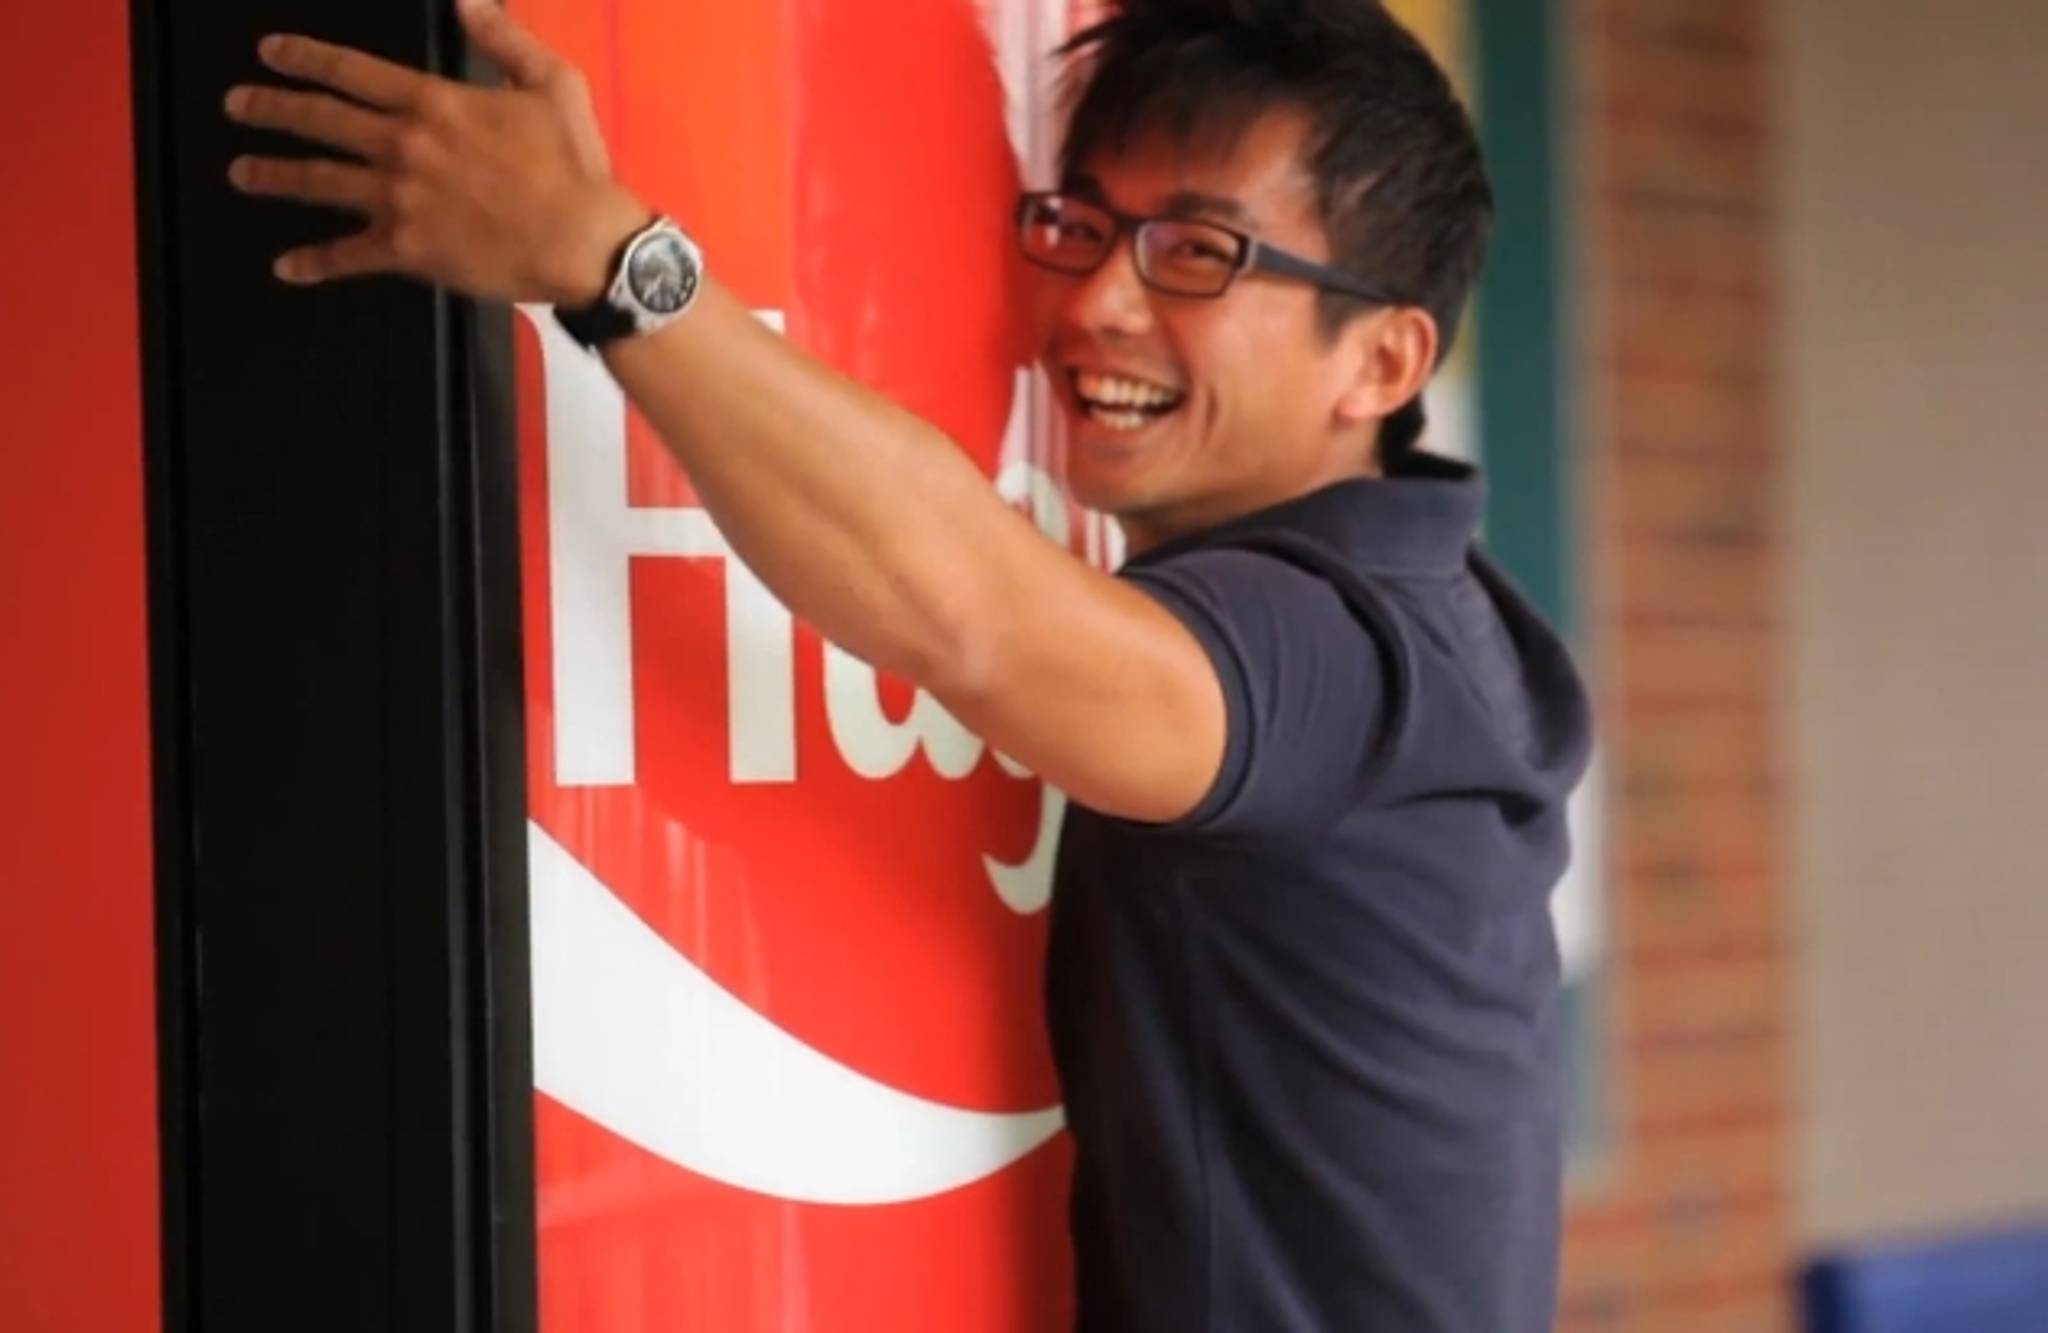 Coca-Cola says 'Hug Me': gestural marketing gets personal